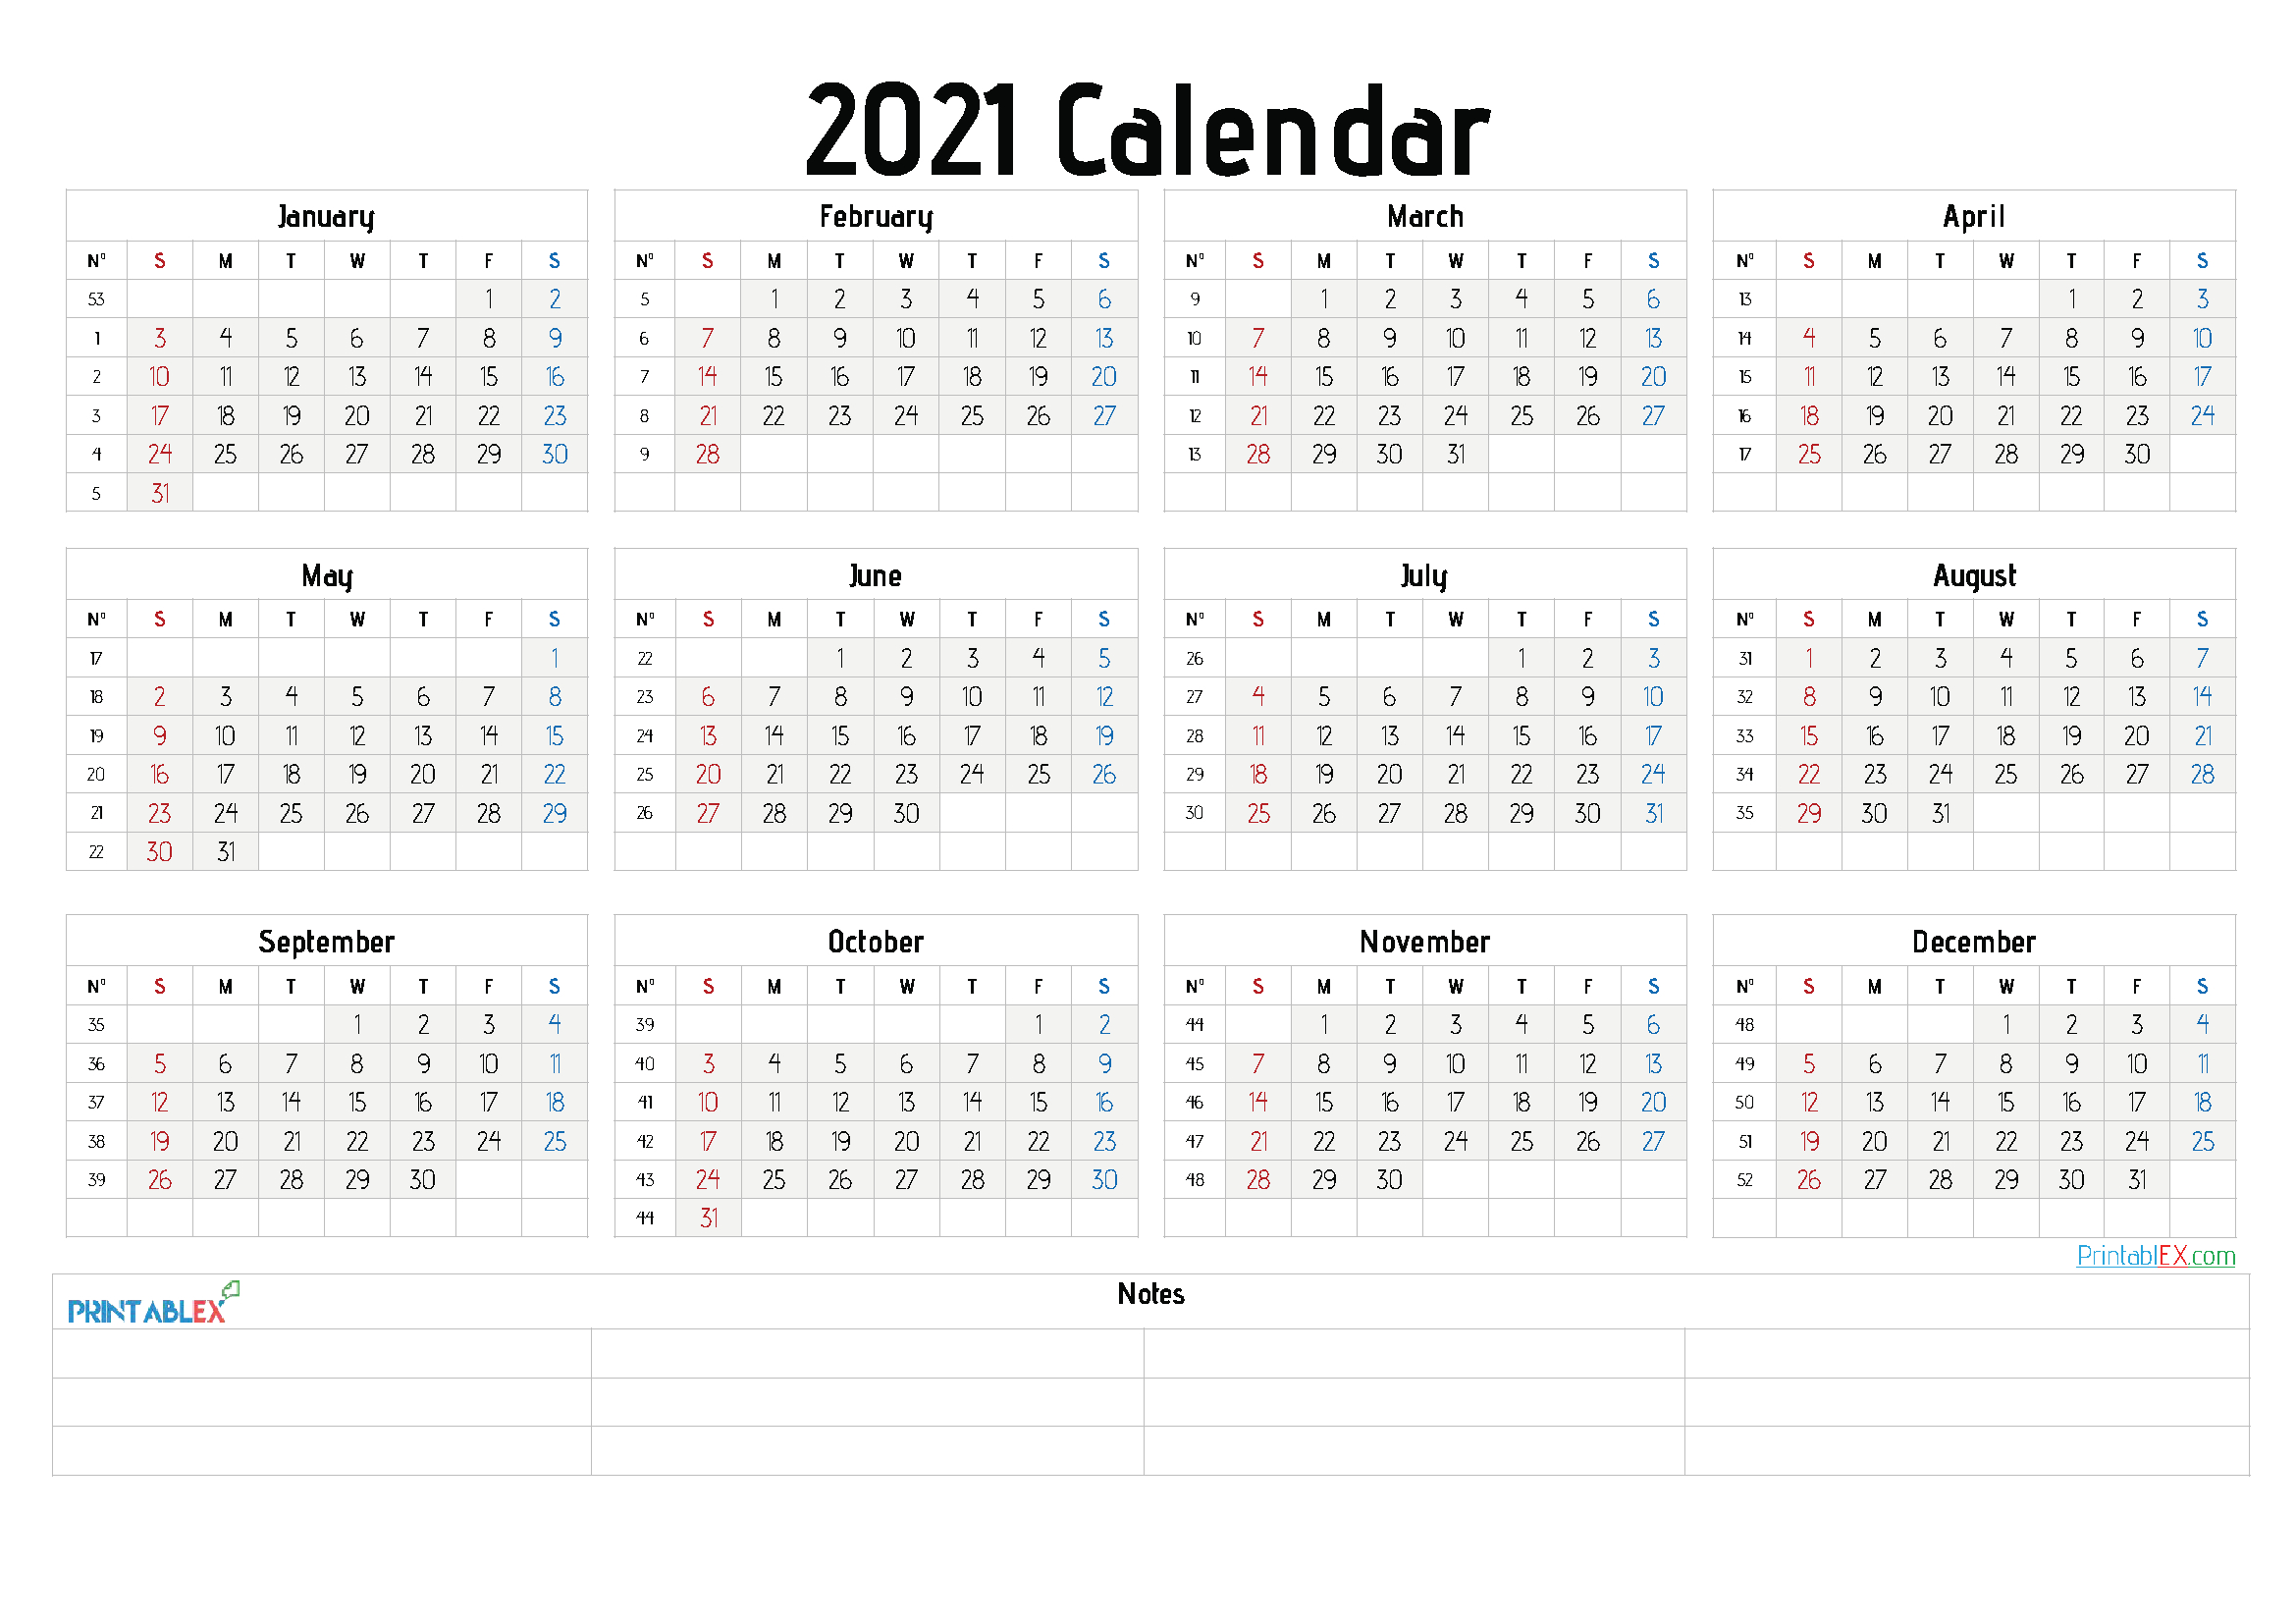 Free 2021 Yearly Calender Template / Calendar 2021 Uk Free-2021 2021 Yearly Calendar Printable Free Pdf